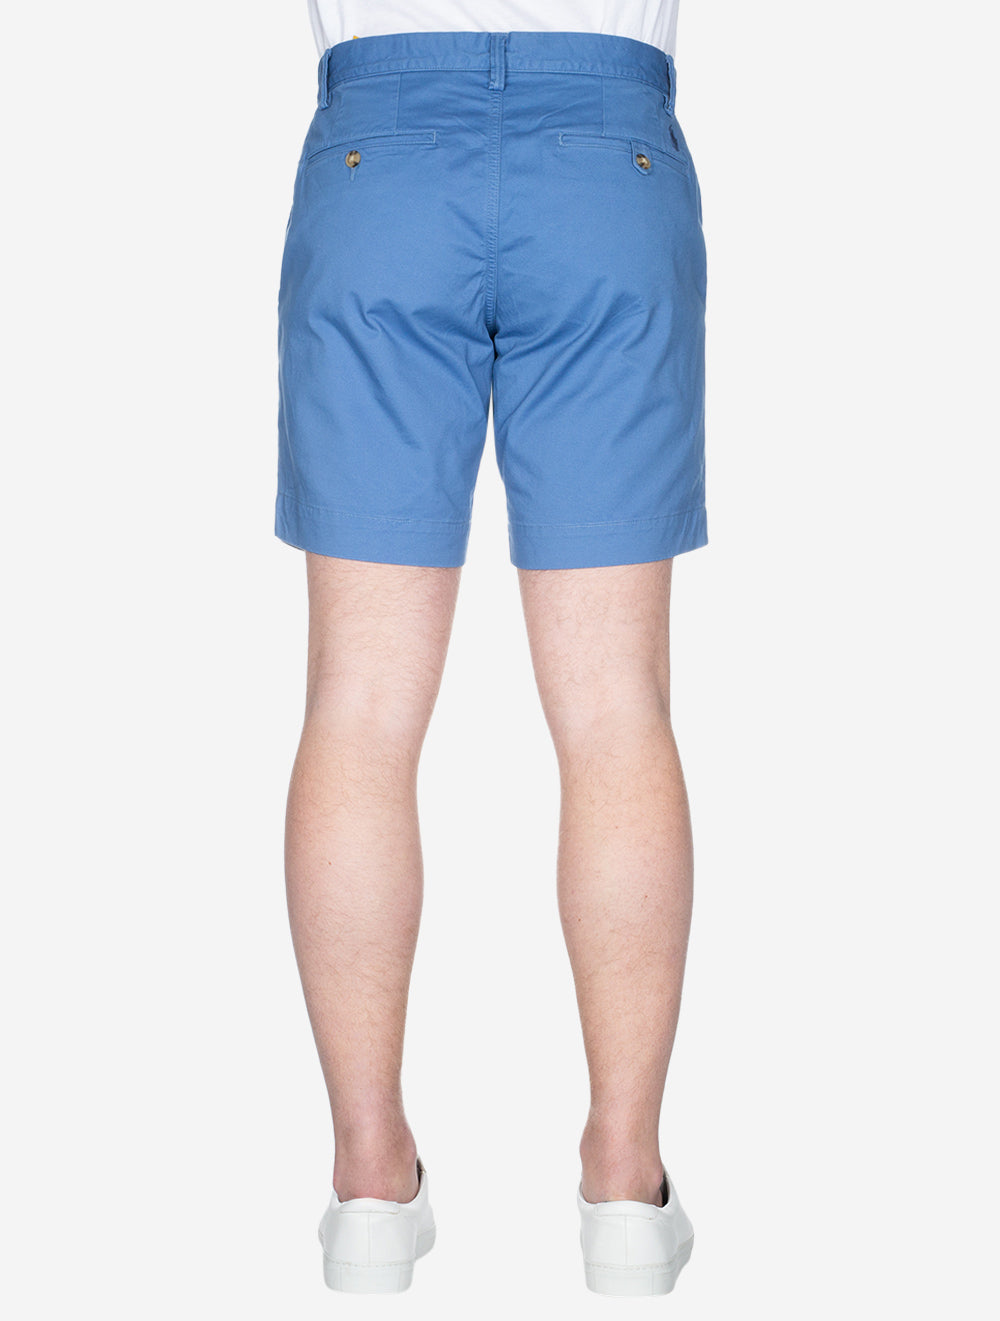 Bedford Shorts Blue